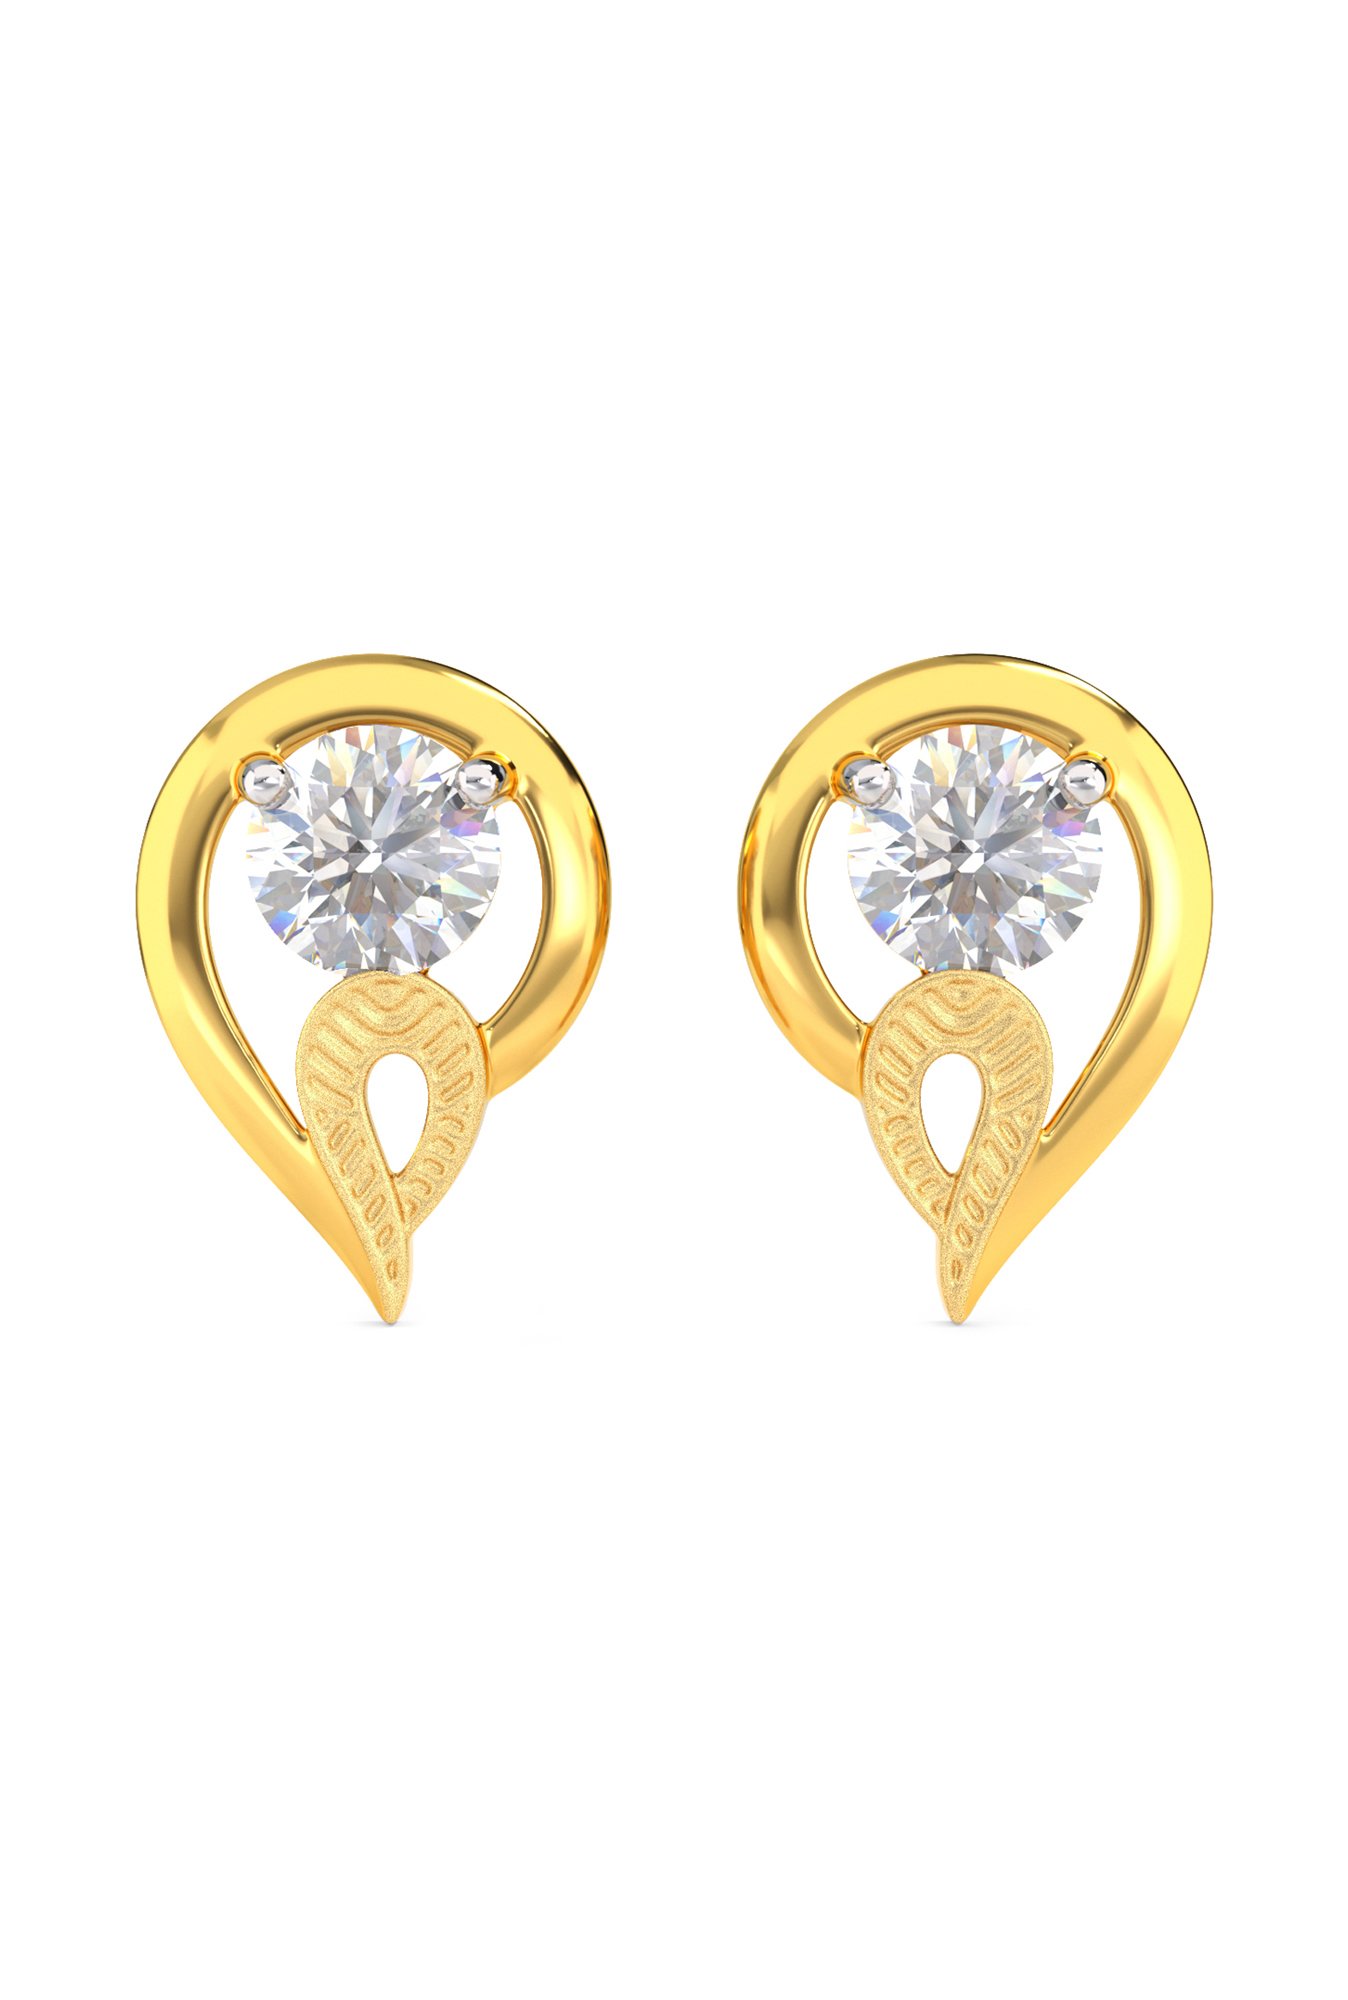 Joyalukkas Impress Collection 22k Yellow Gold Stud Earrings